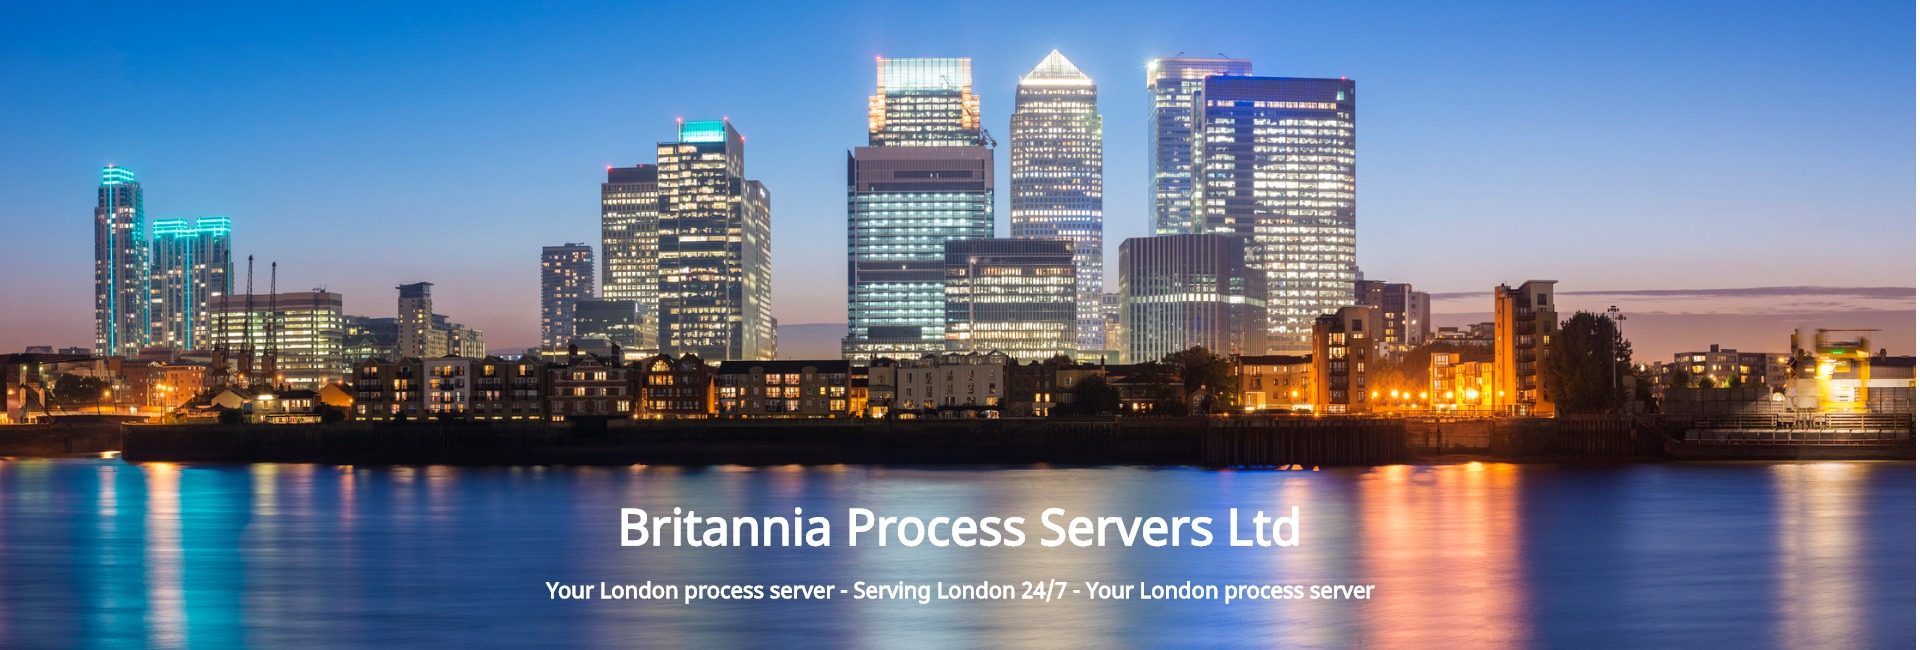 Services London Process Servers